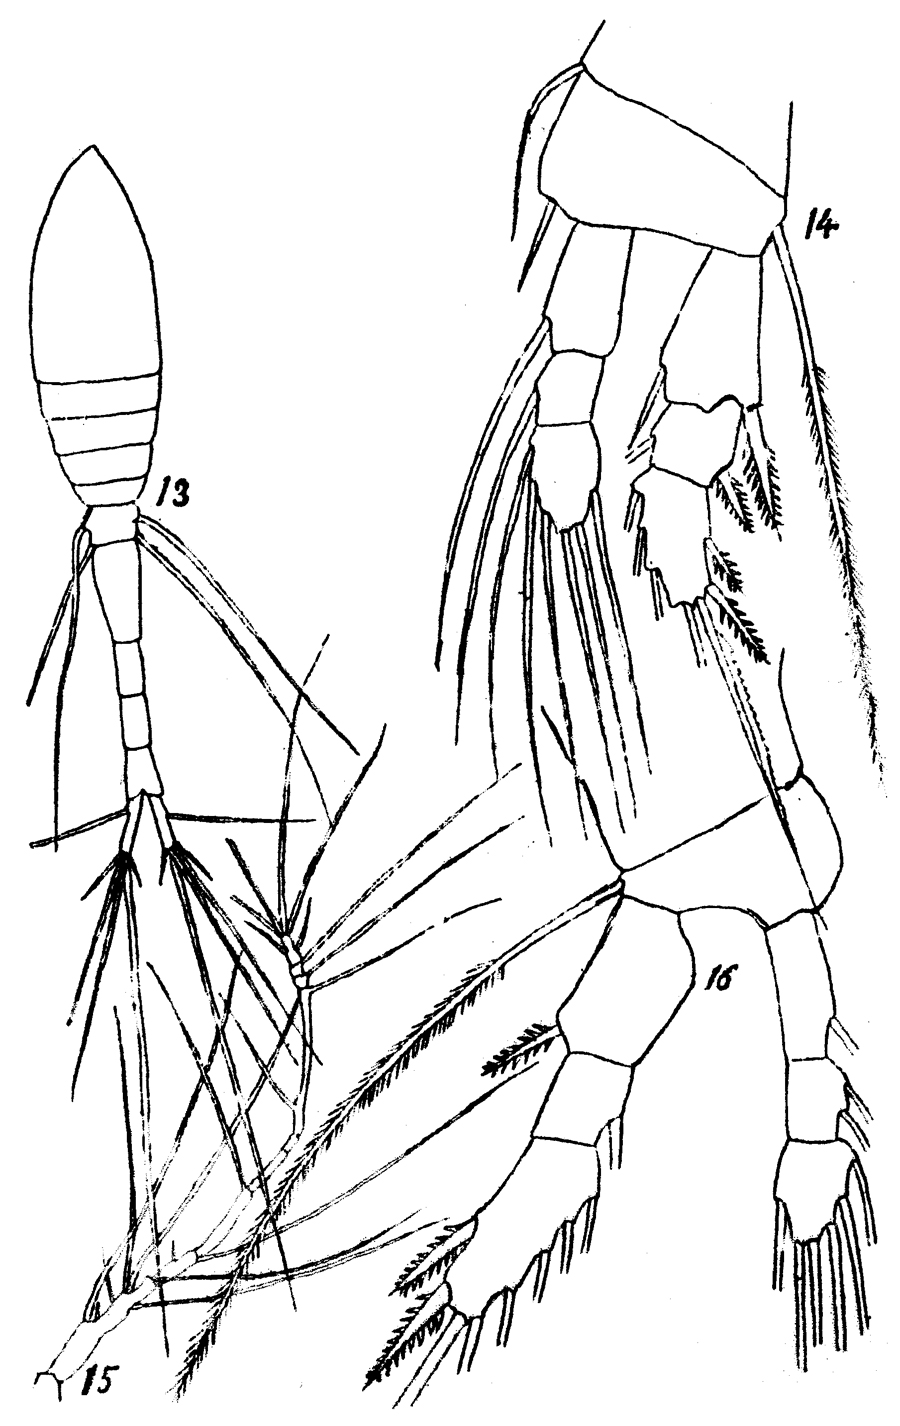 Species Oithona atlantica - Plate 10 of morphological figures